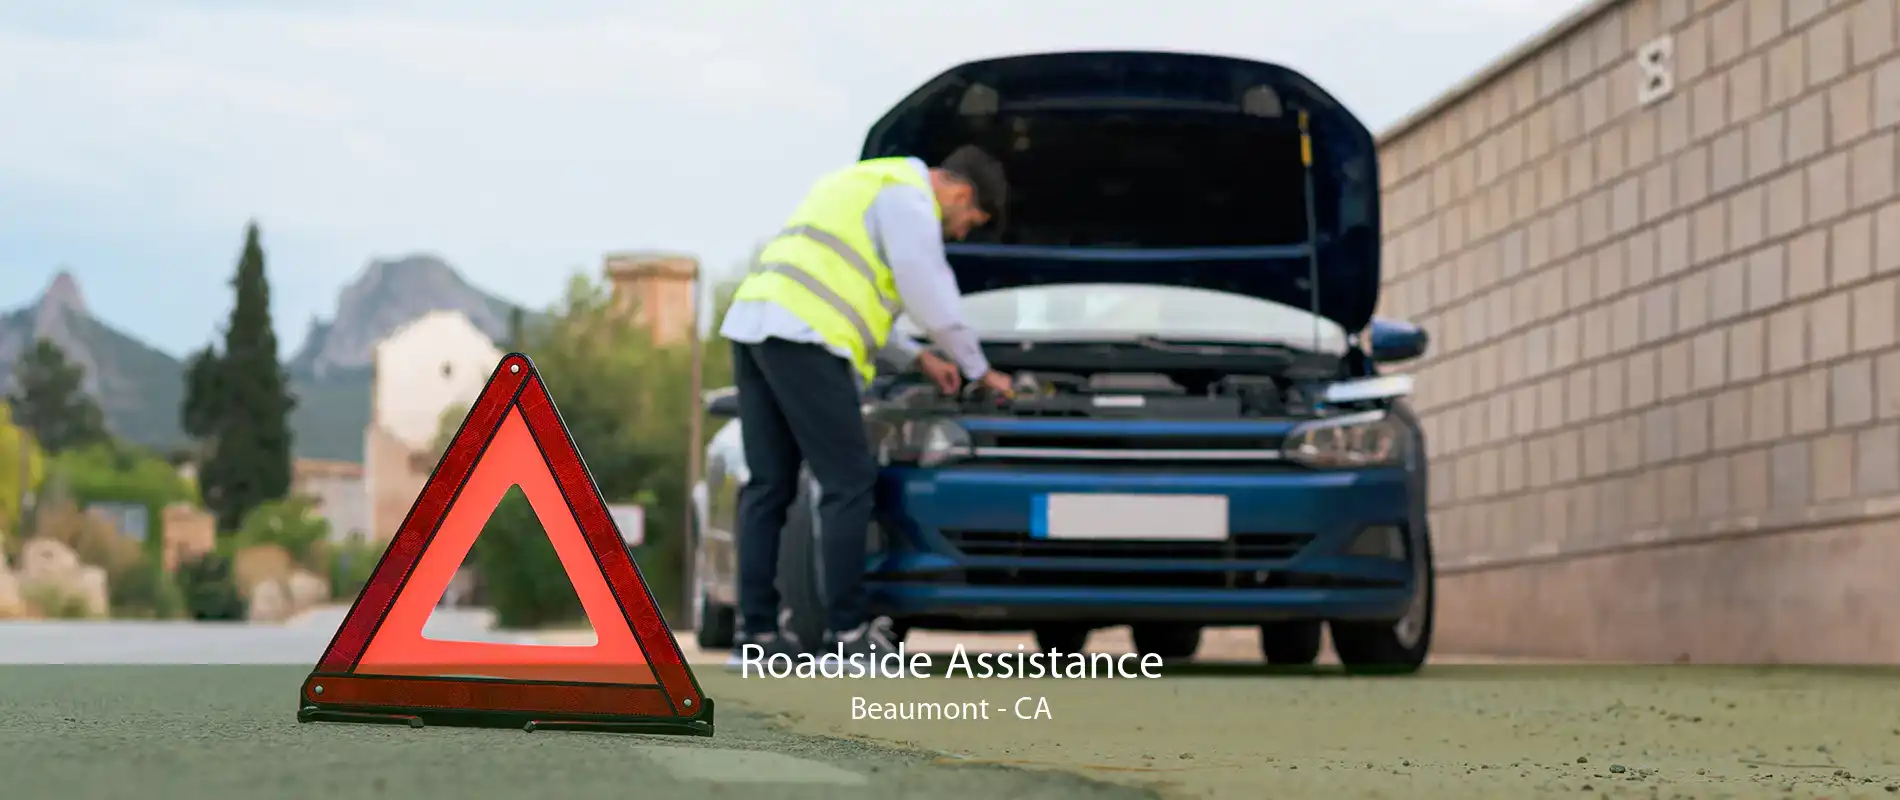 Roadside Assistance Beaumont - CA